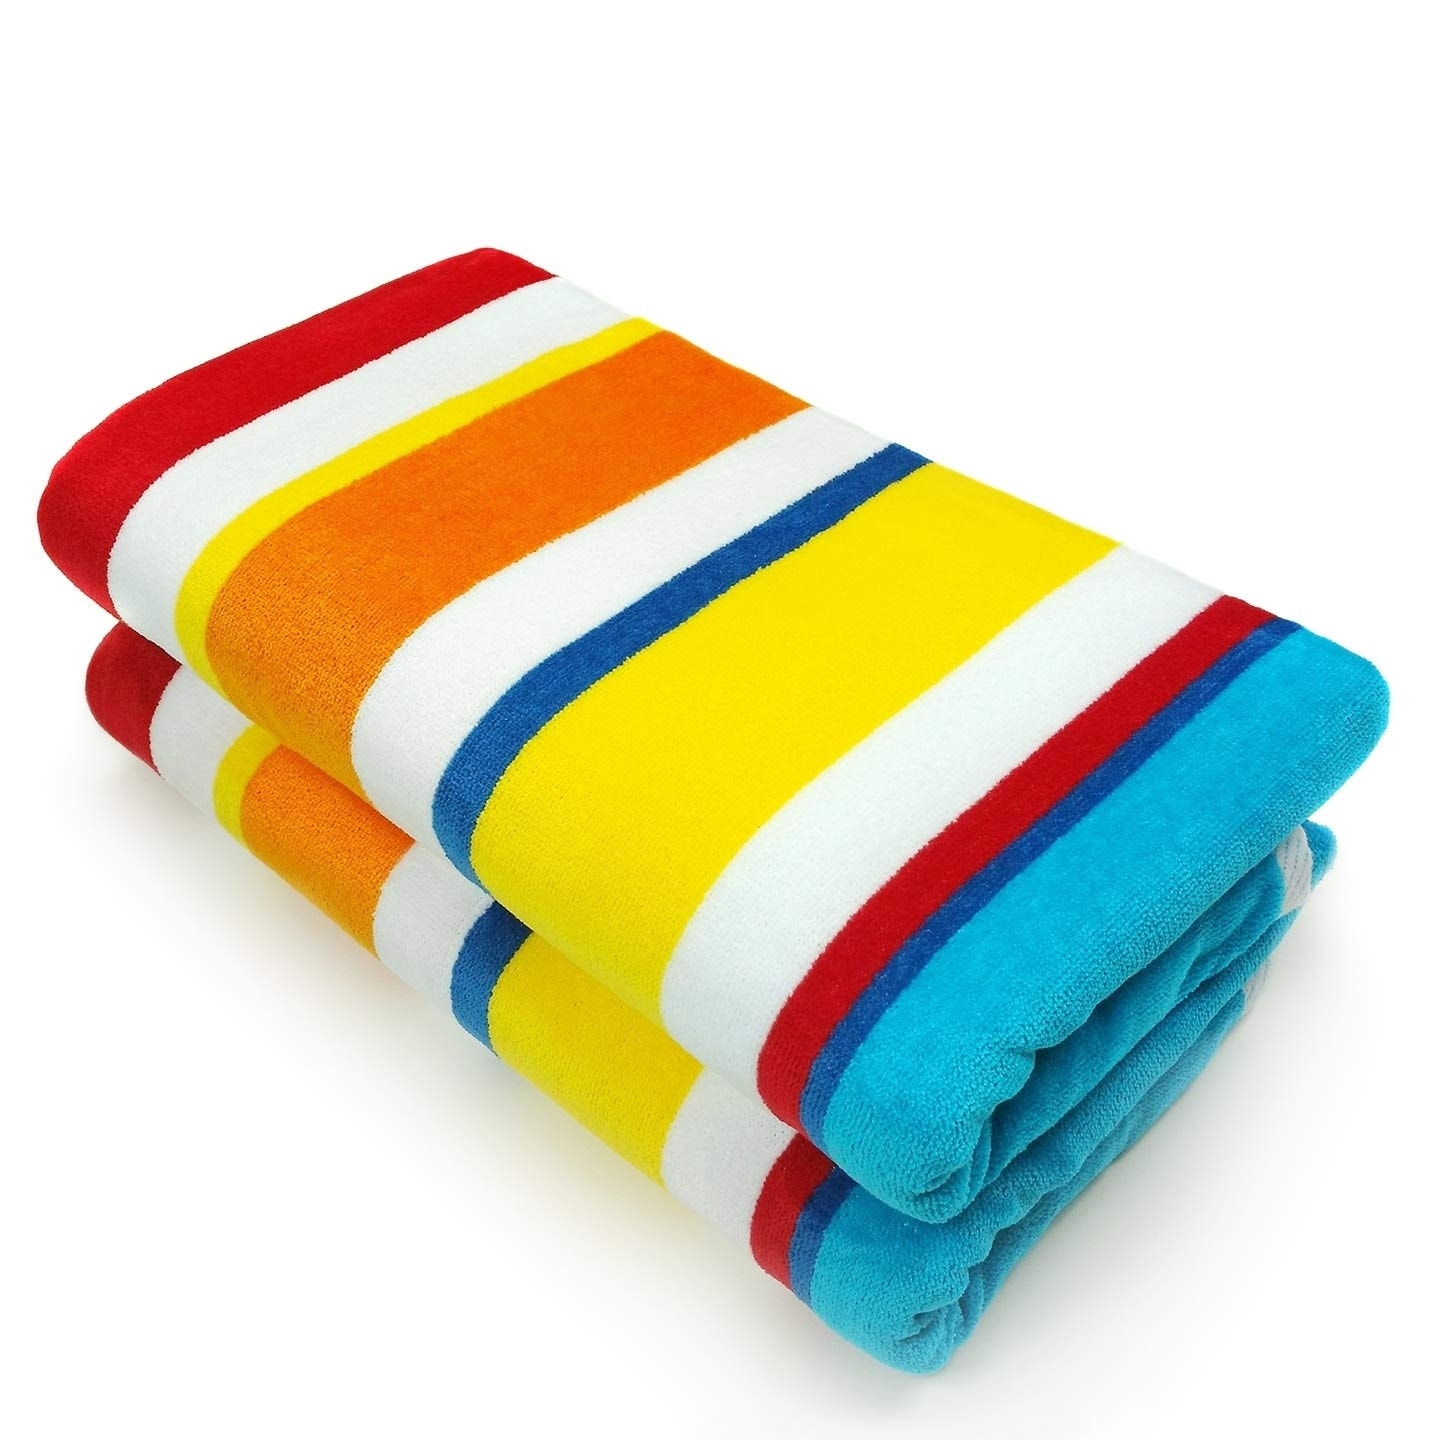 Kaufman Joey Velour Multicolor Striped Beach Towel Set Of 2 50d70200 080c 4374 B46b 74cedd1ad5e5 